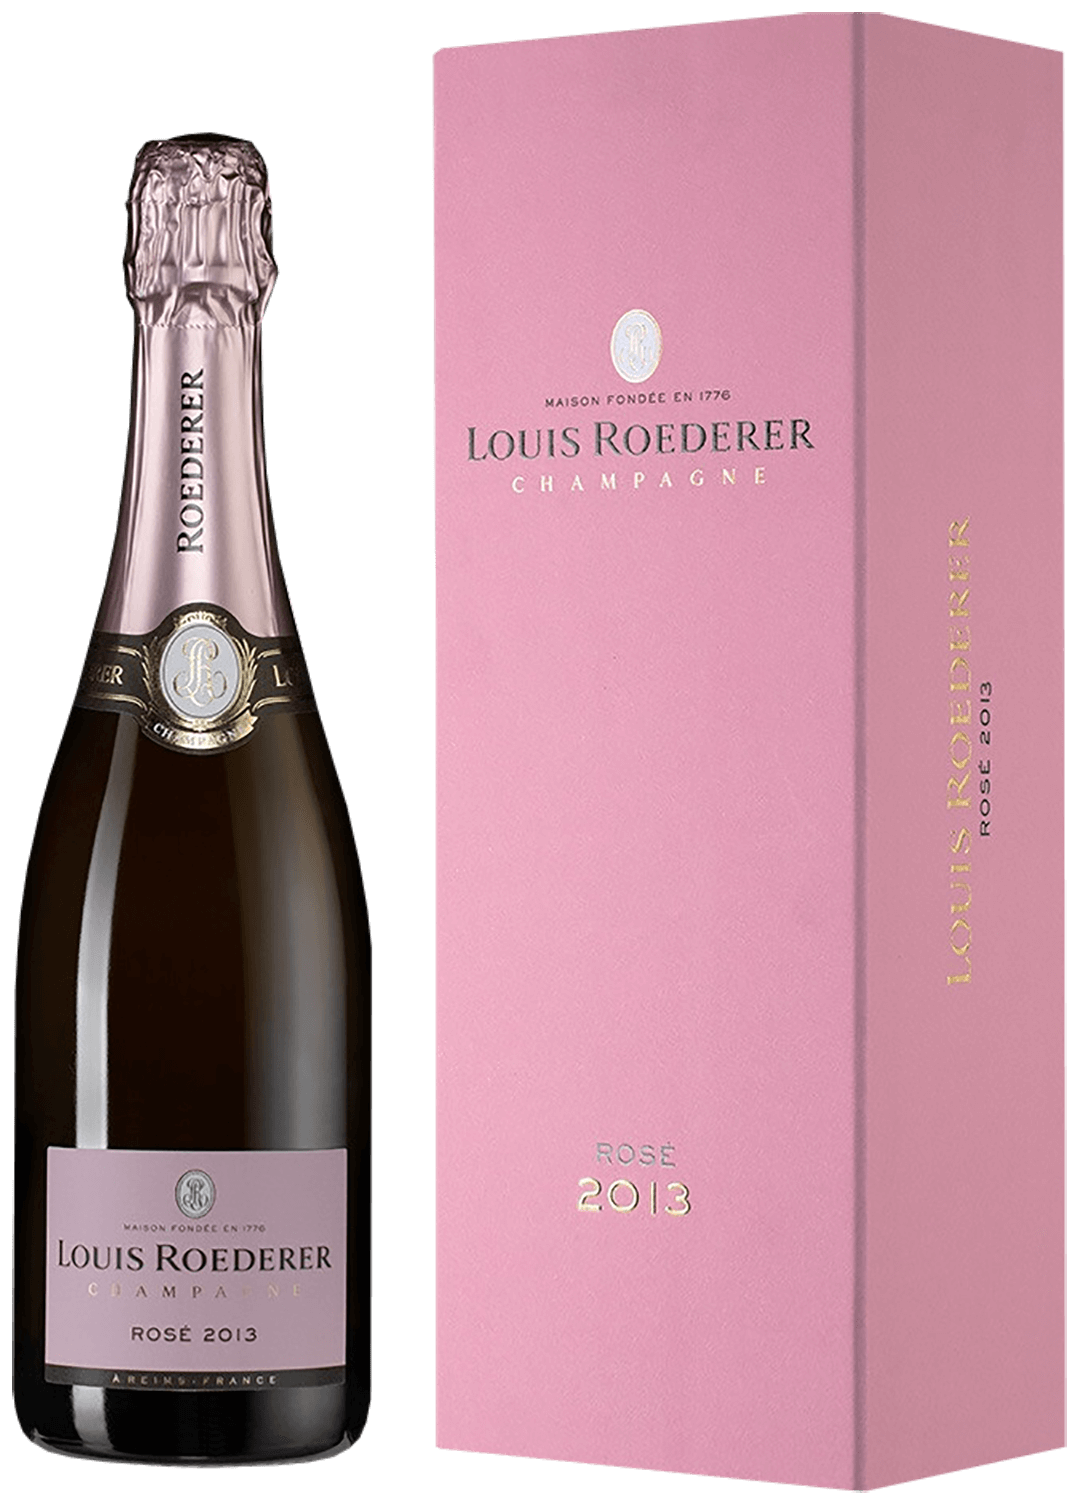 Brut Rose Champagne AOC Louis Roederer (gift box) ruinart rose champagne aoc gift box